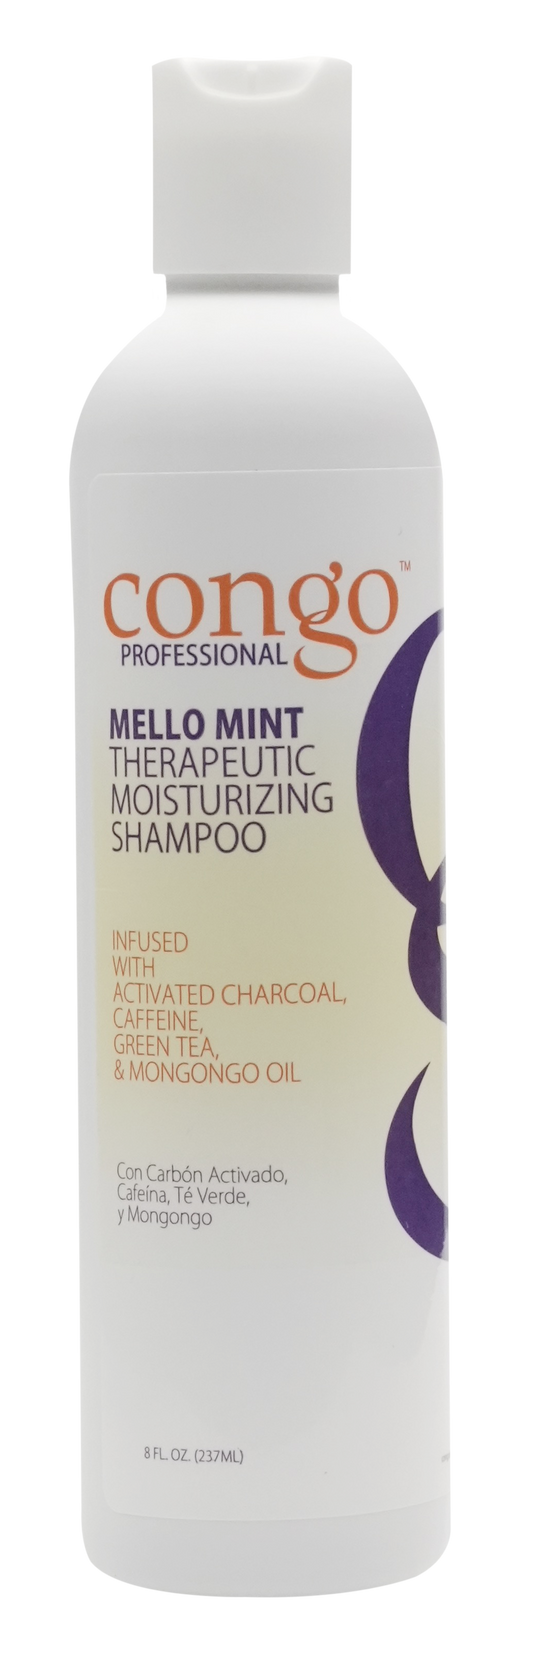 Congo - Mello Mint - Therapeutic Moisturizing Shampoo 8oz|32oz